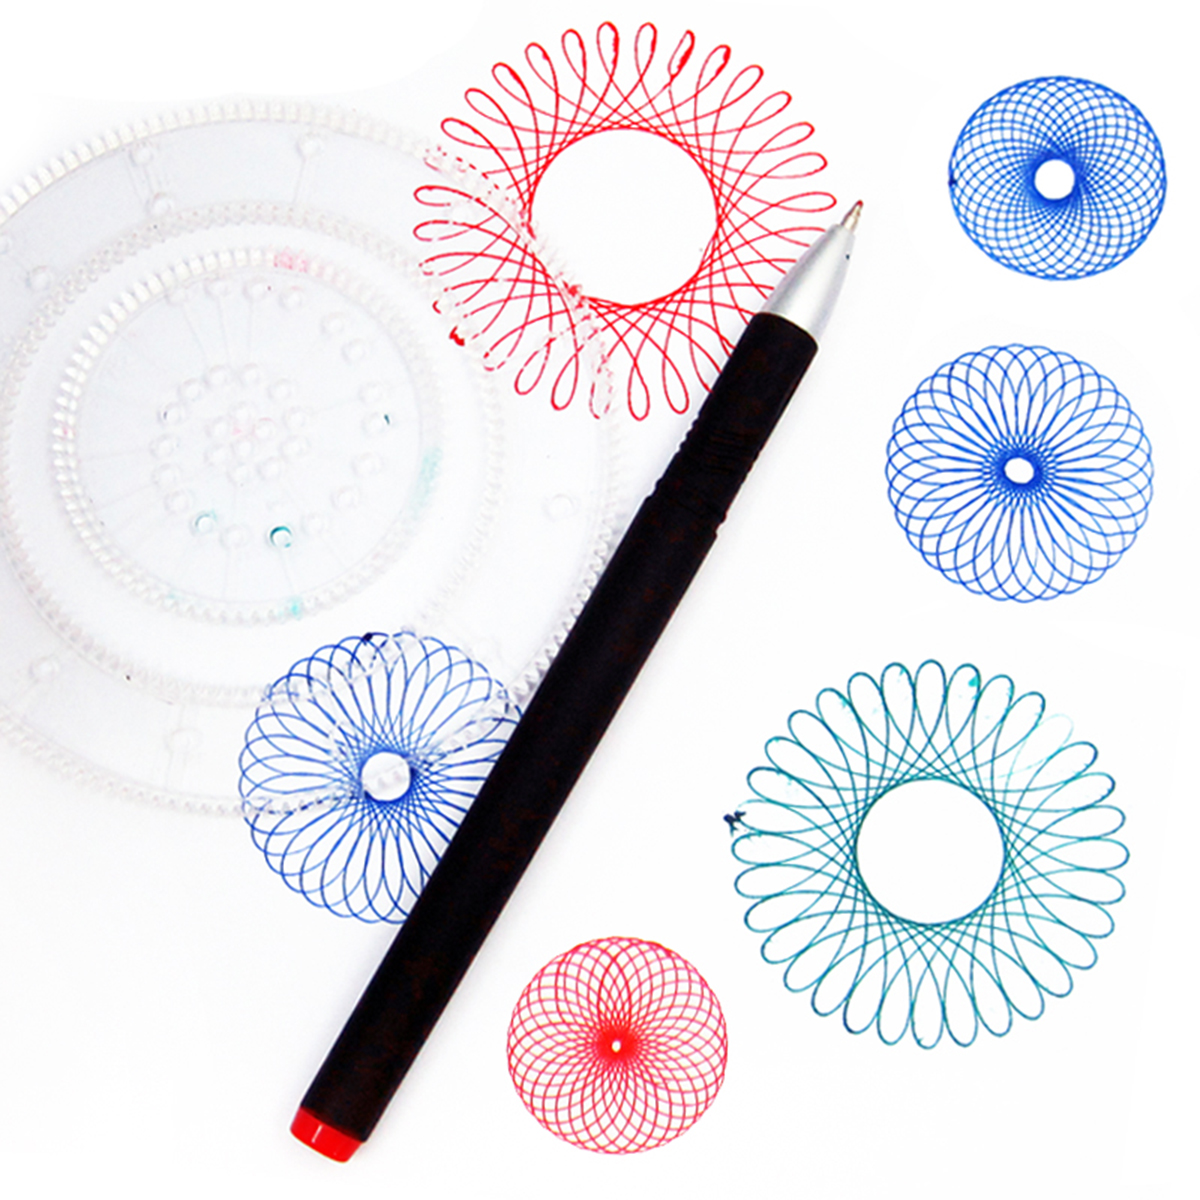 Original Spirograph Design Set Geometric Drawing Ruler Kids Spiral Art Craft Creation Education Toy 16